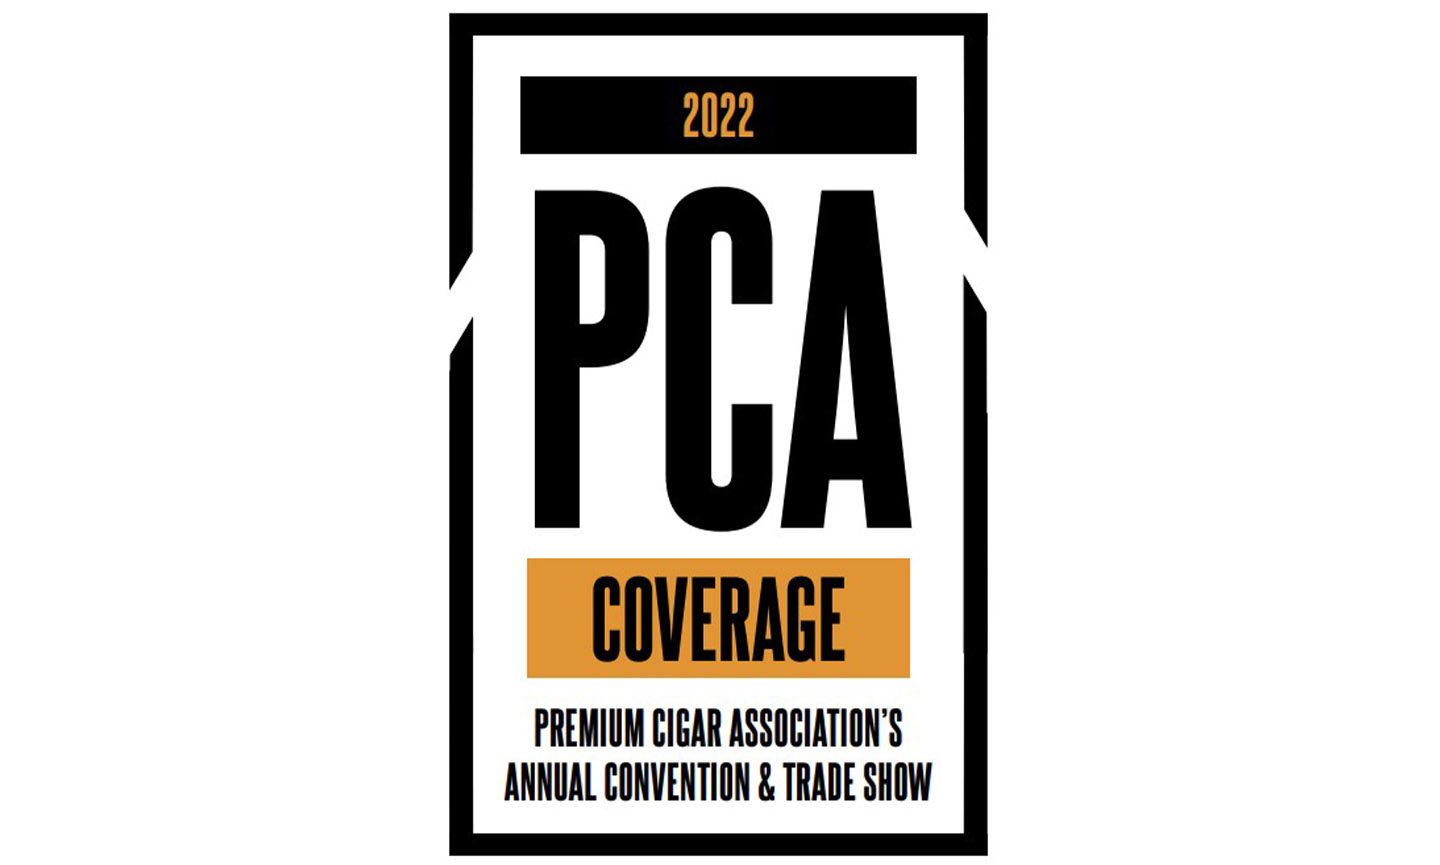 pca-2022-coverage:-premium-cigar-association’s-annual-convention-&-trade-show